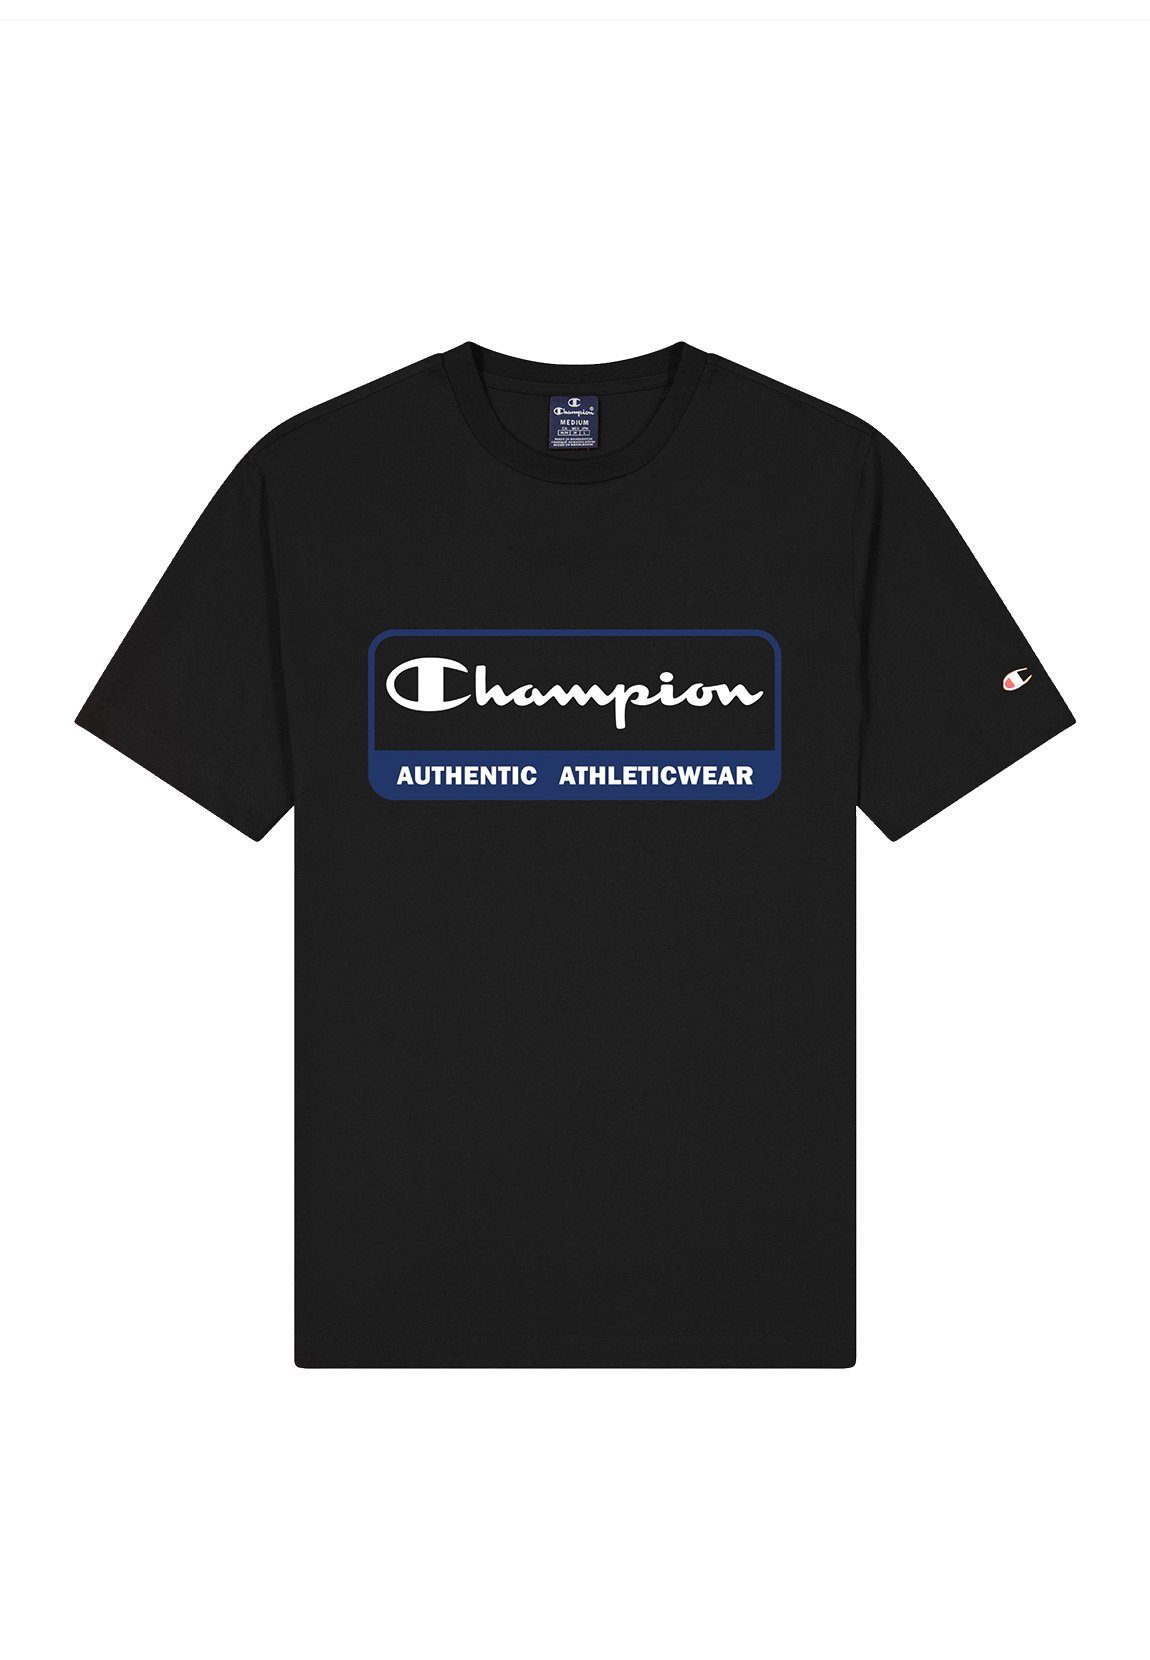 Champion 219165 NBK T-Shirt T-Shirt Schwarz Herren KK001 Champion